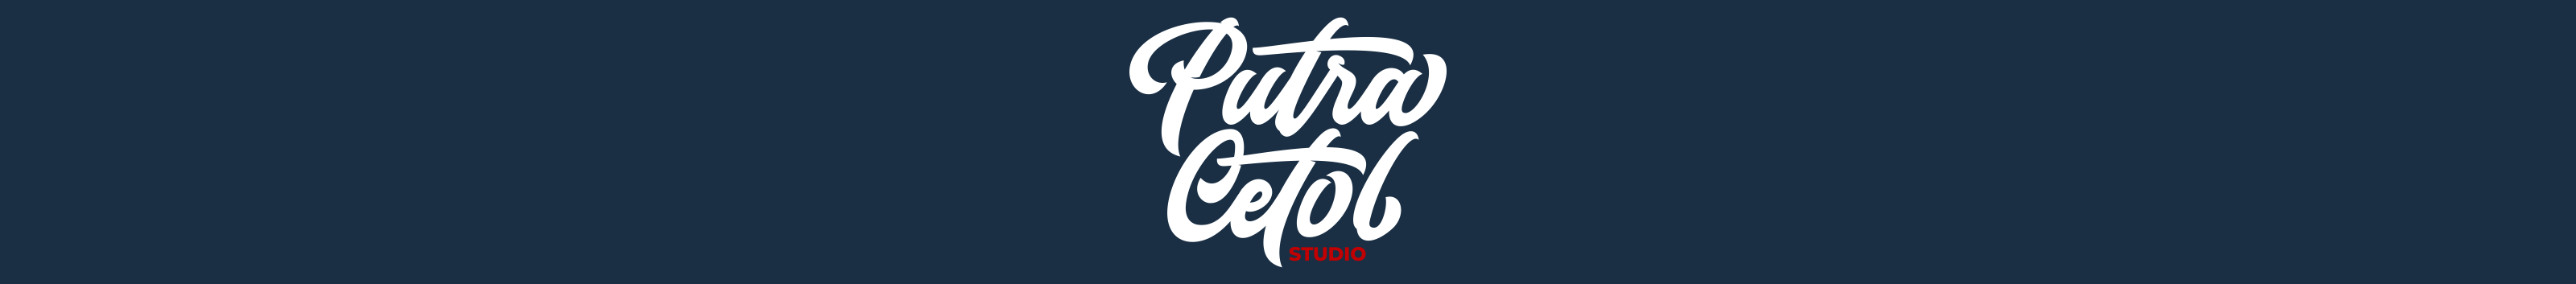 PutraCetol Studio's profile banner